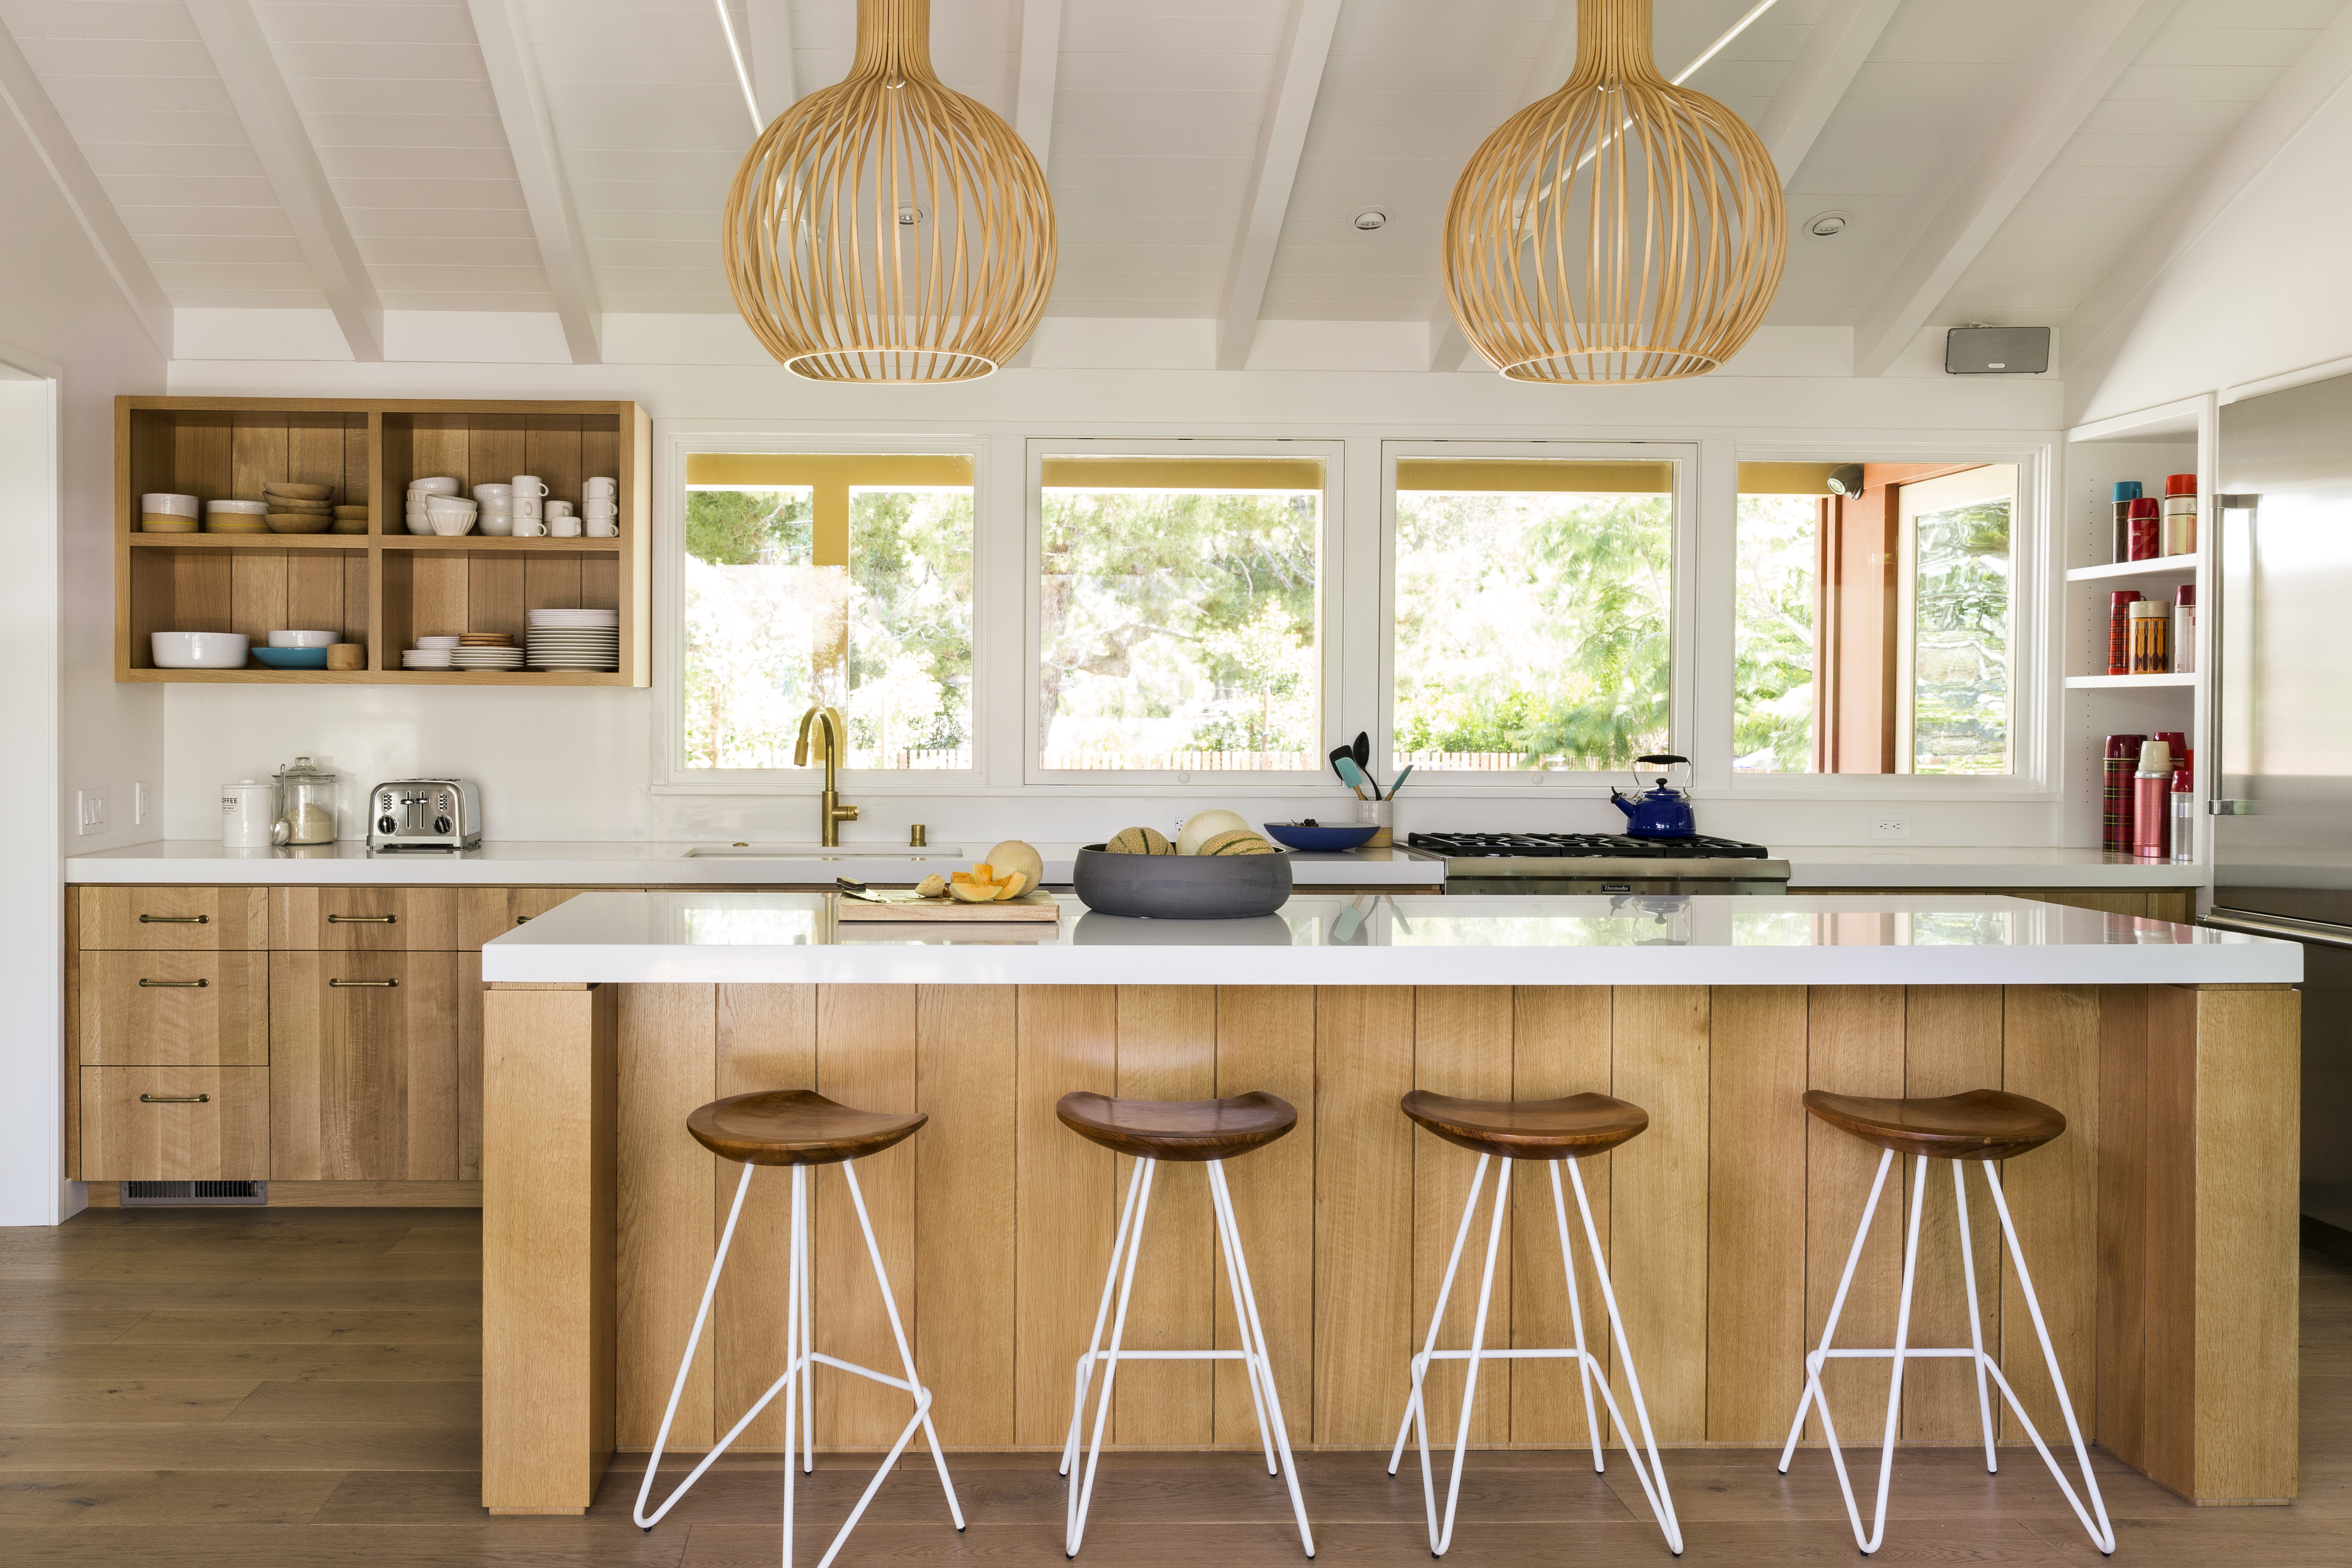 exquisite kitchen design ideas in the beautiful cm4 house ... ZBCWCGM